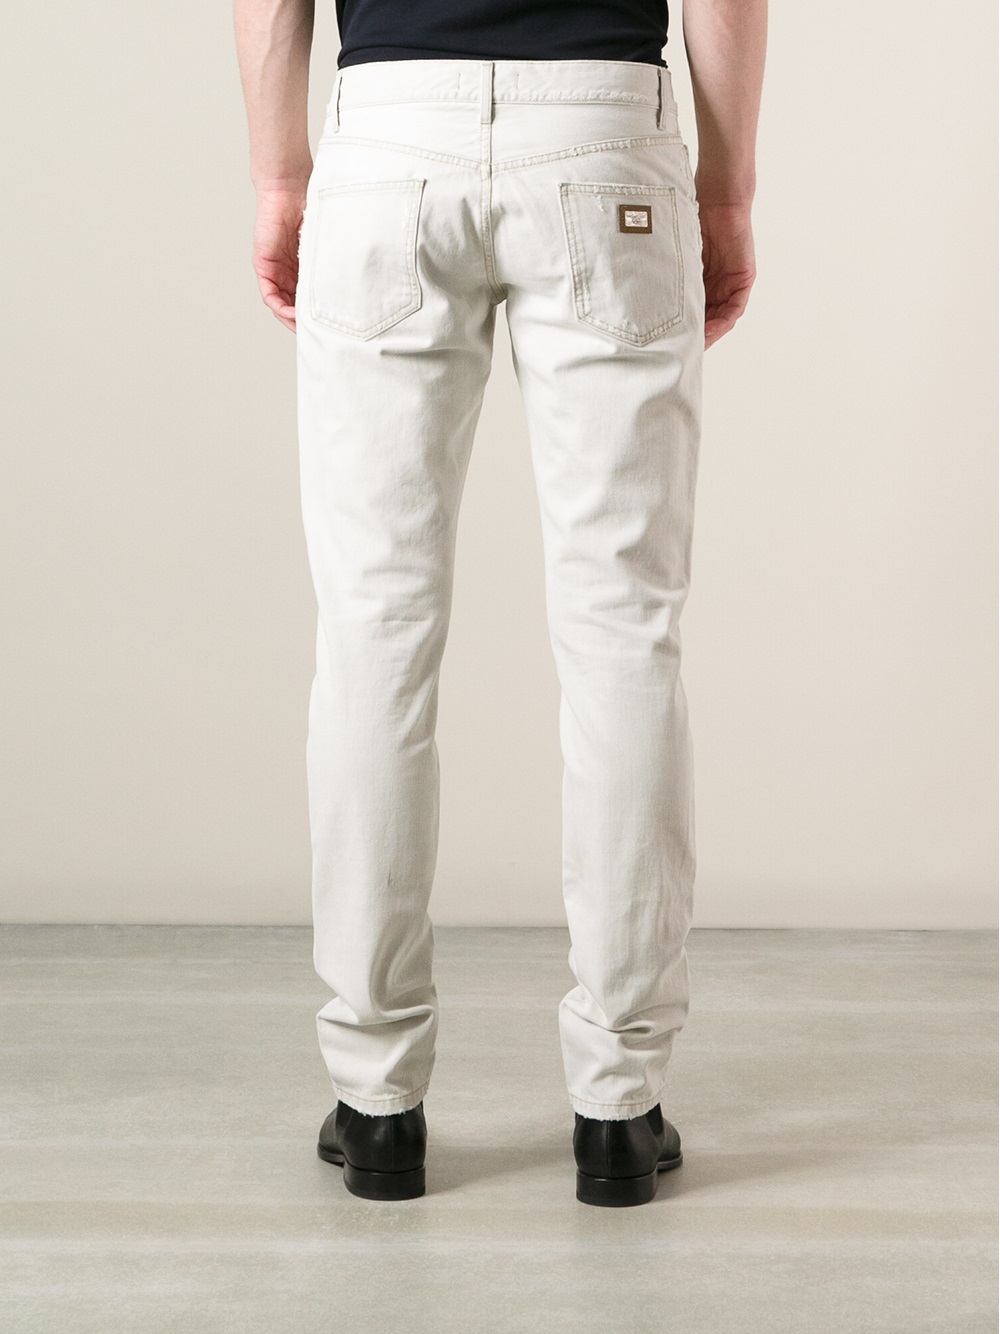 dolce gabbana white jeans